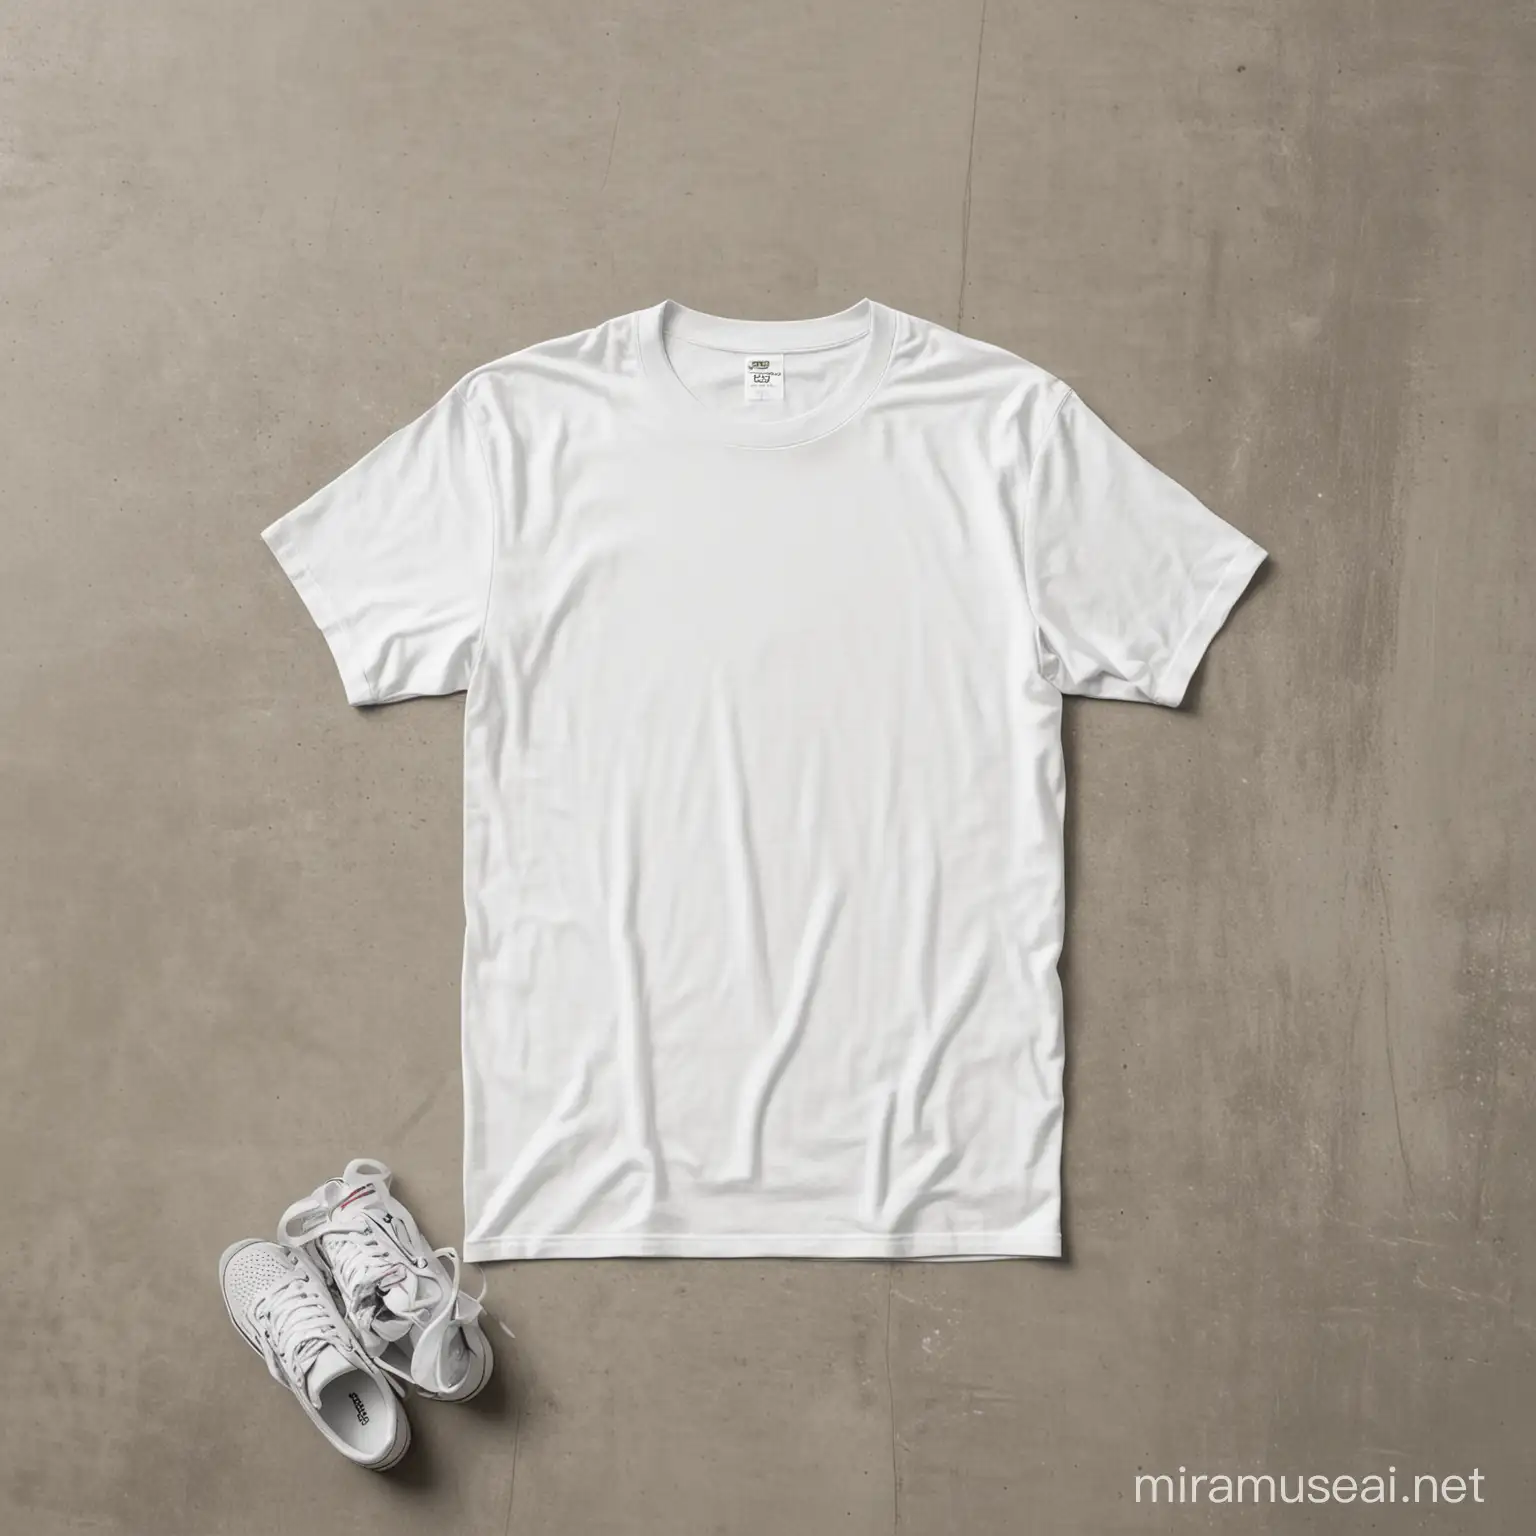 Gildan 5000B mockup in white with a blank t-shirt on an empty floor